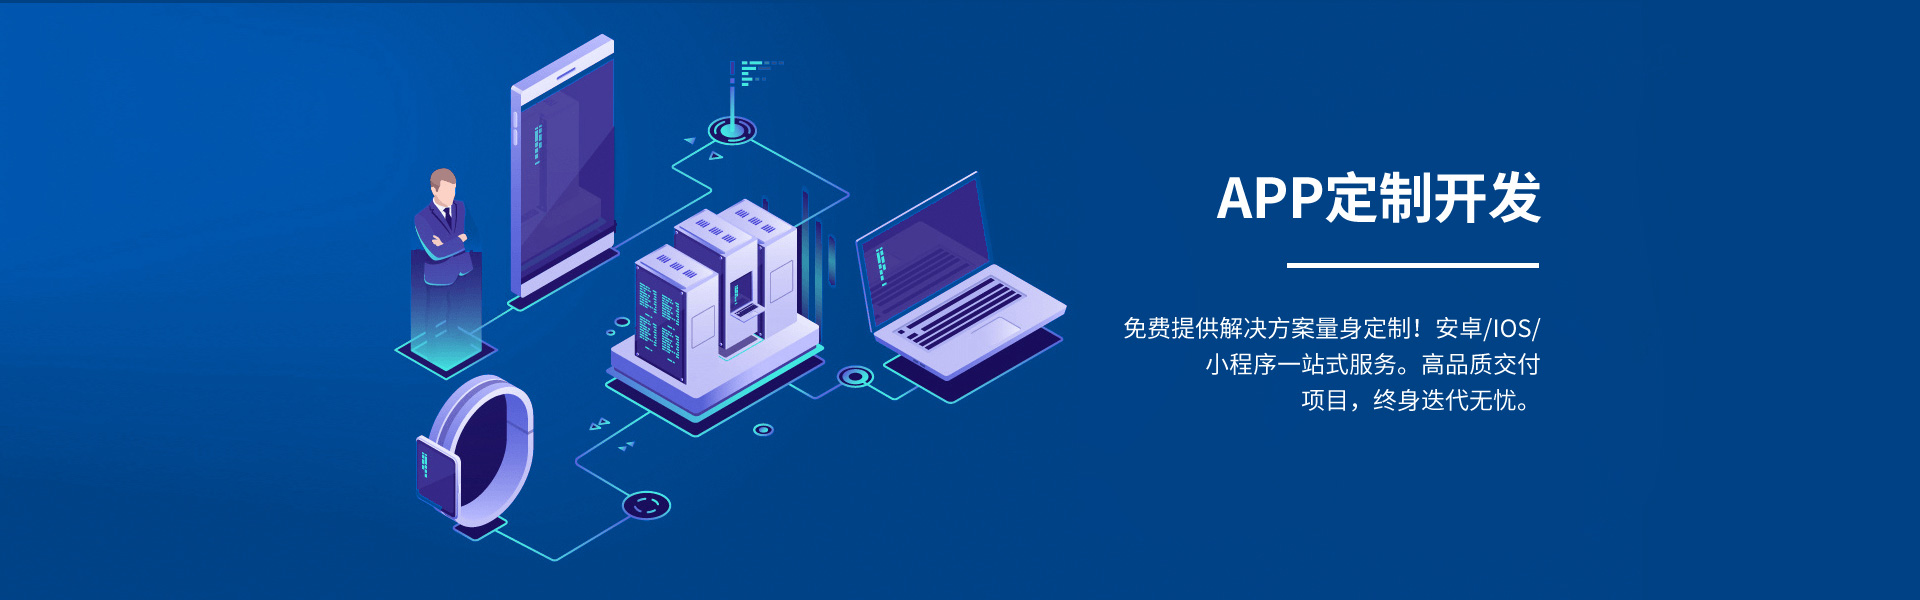 连云港app定制开发,免费提供iOS、android量身定制的解决方案